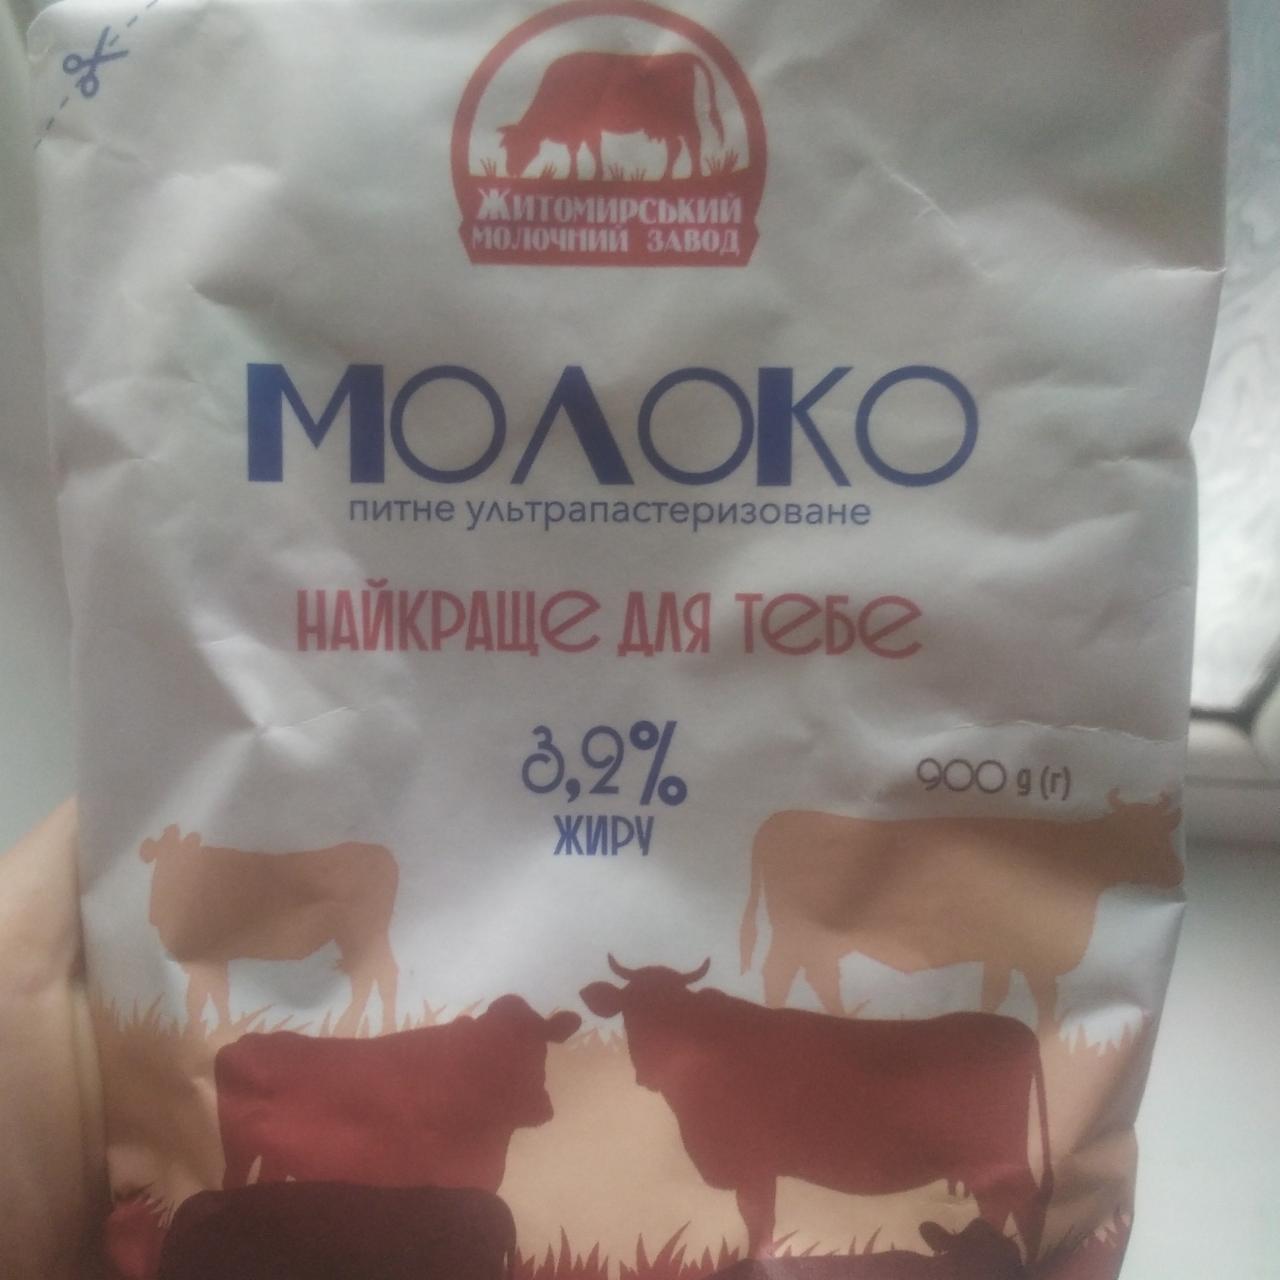 Фото - Молоко 3.2% Житомирський молочний завод